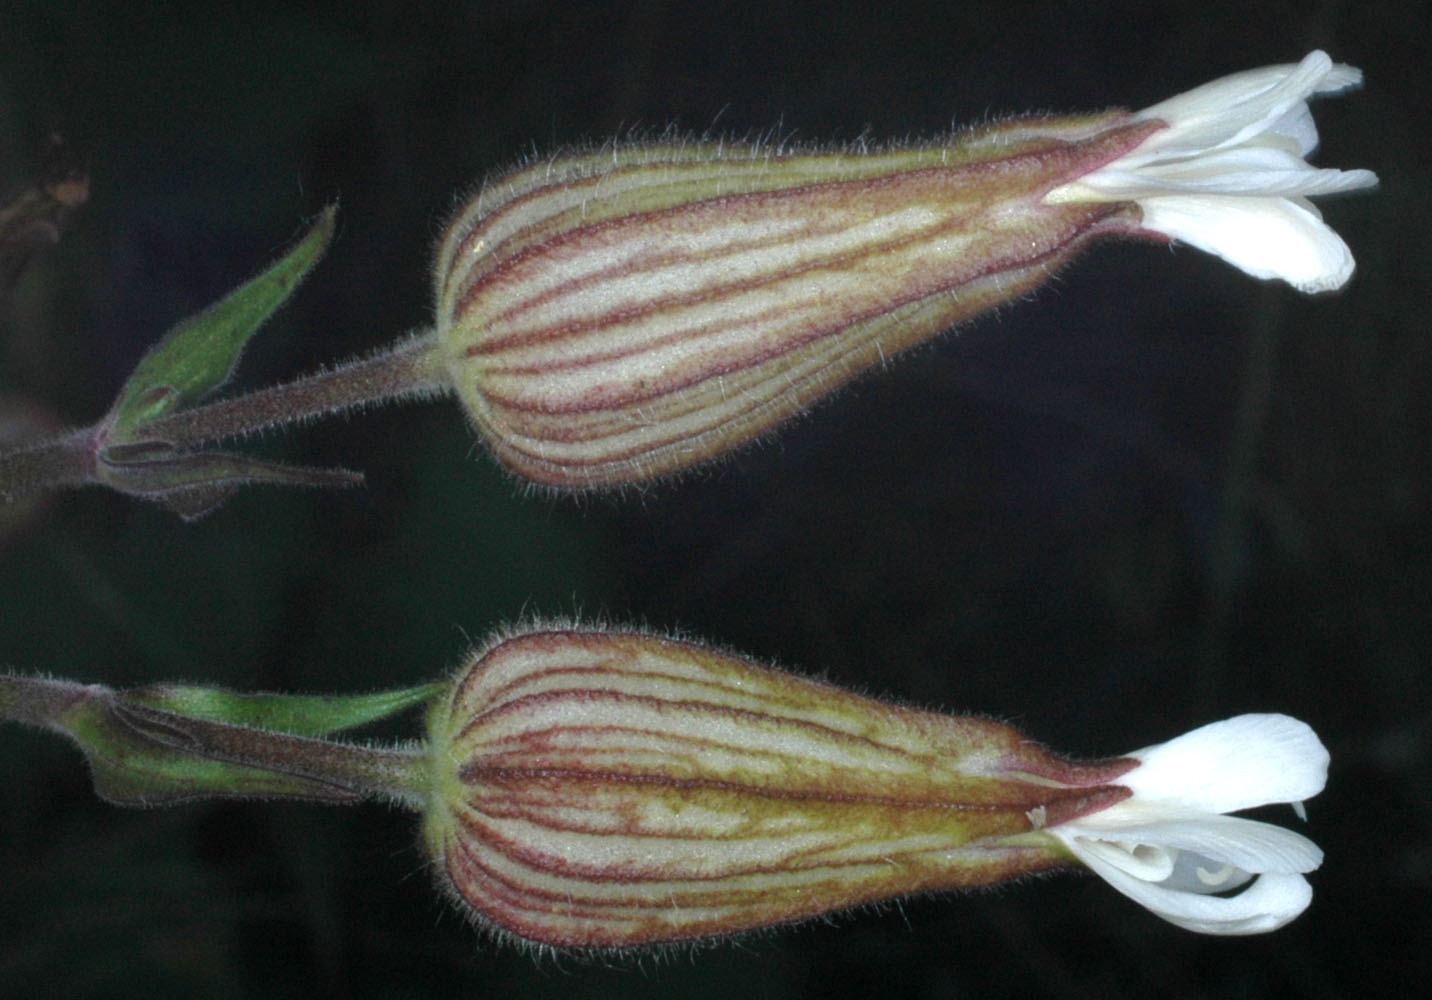 Flora of Eastern Washington Image: Silene latifolia